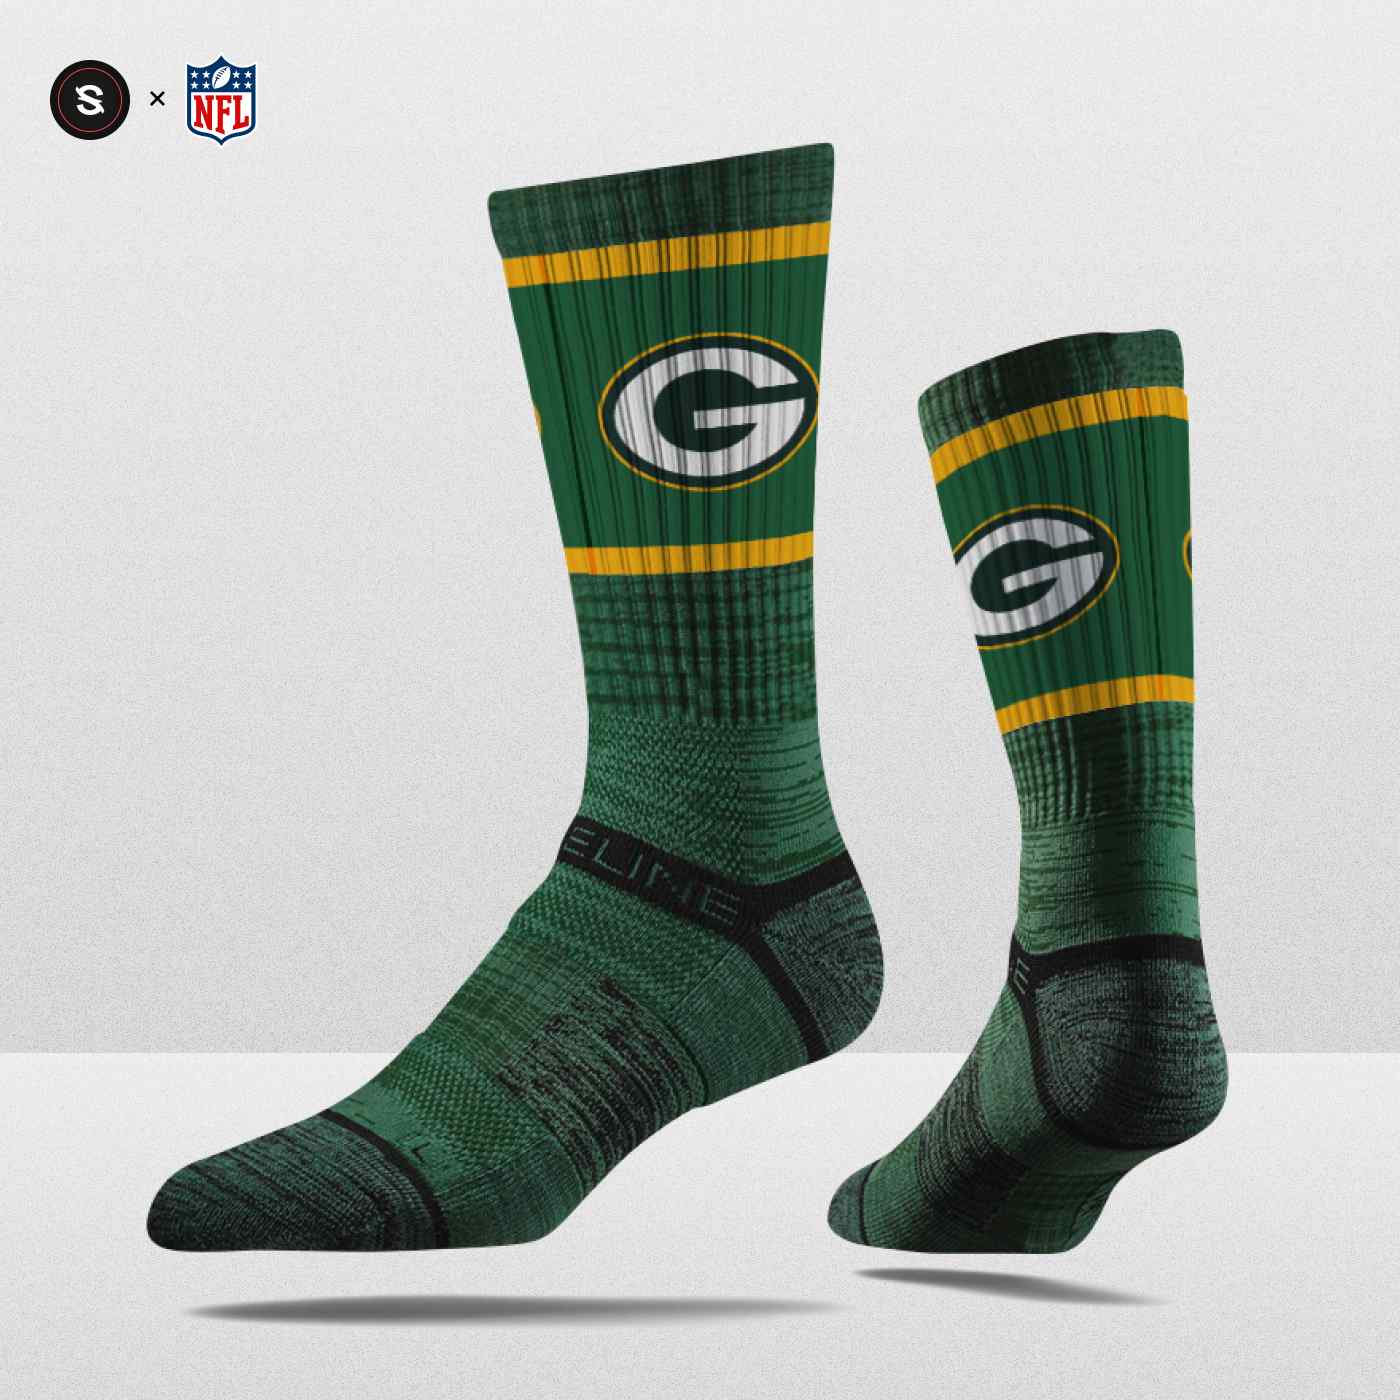 Green Bay Packers socks